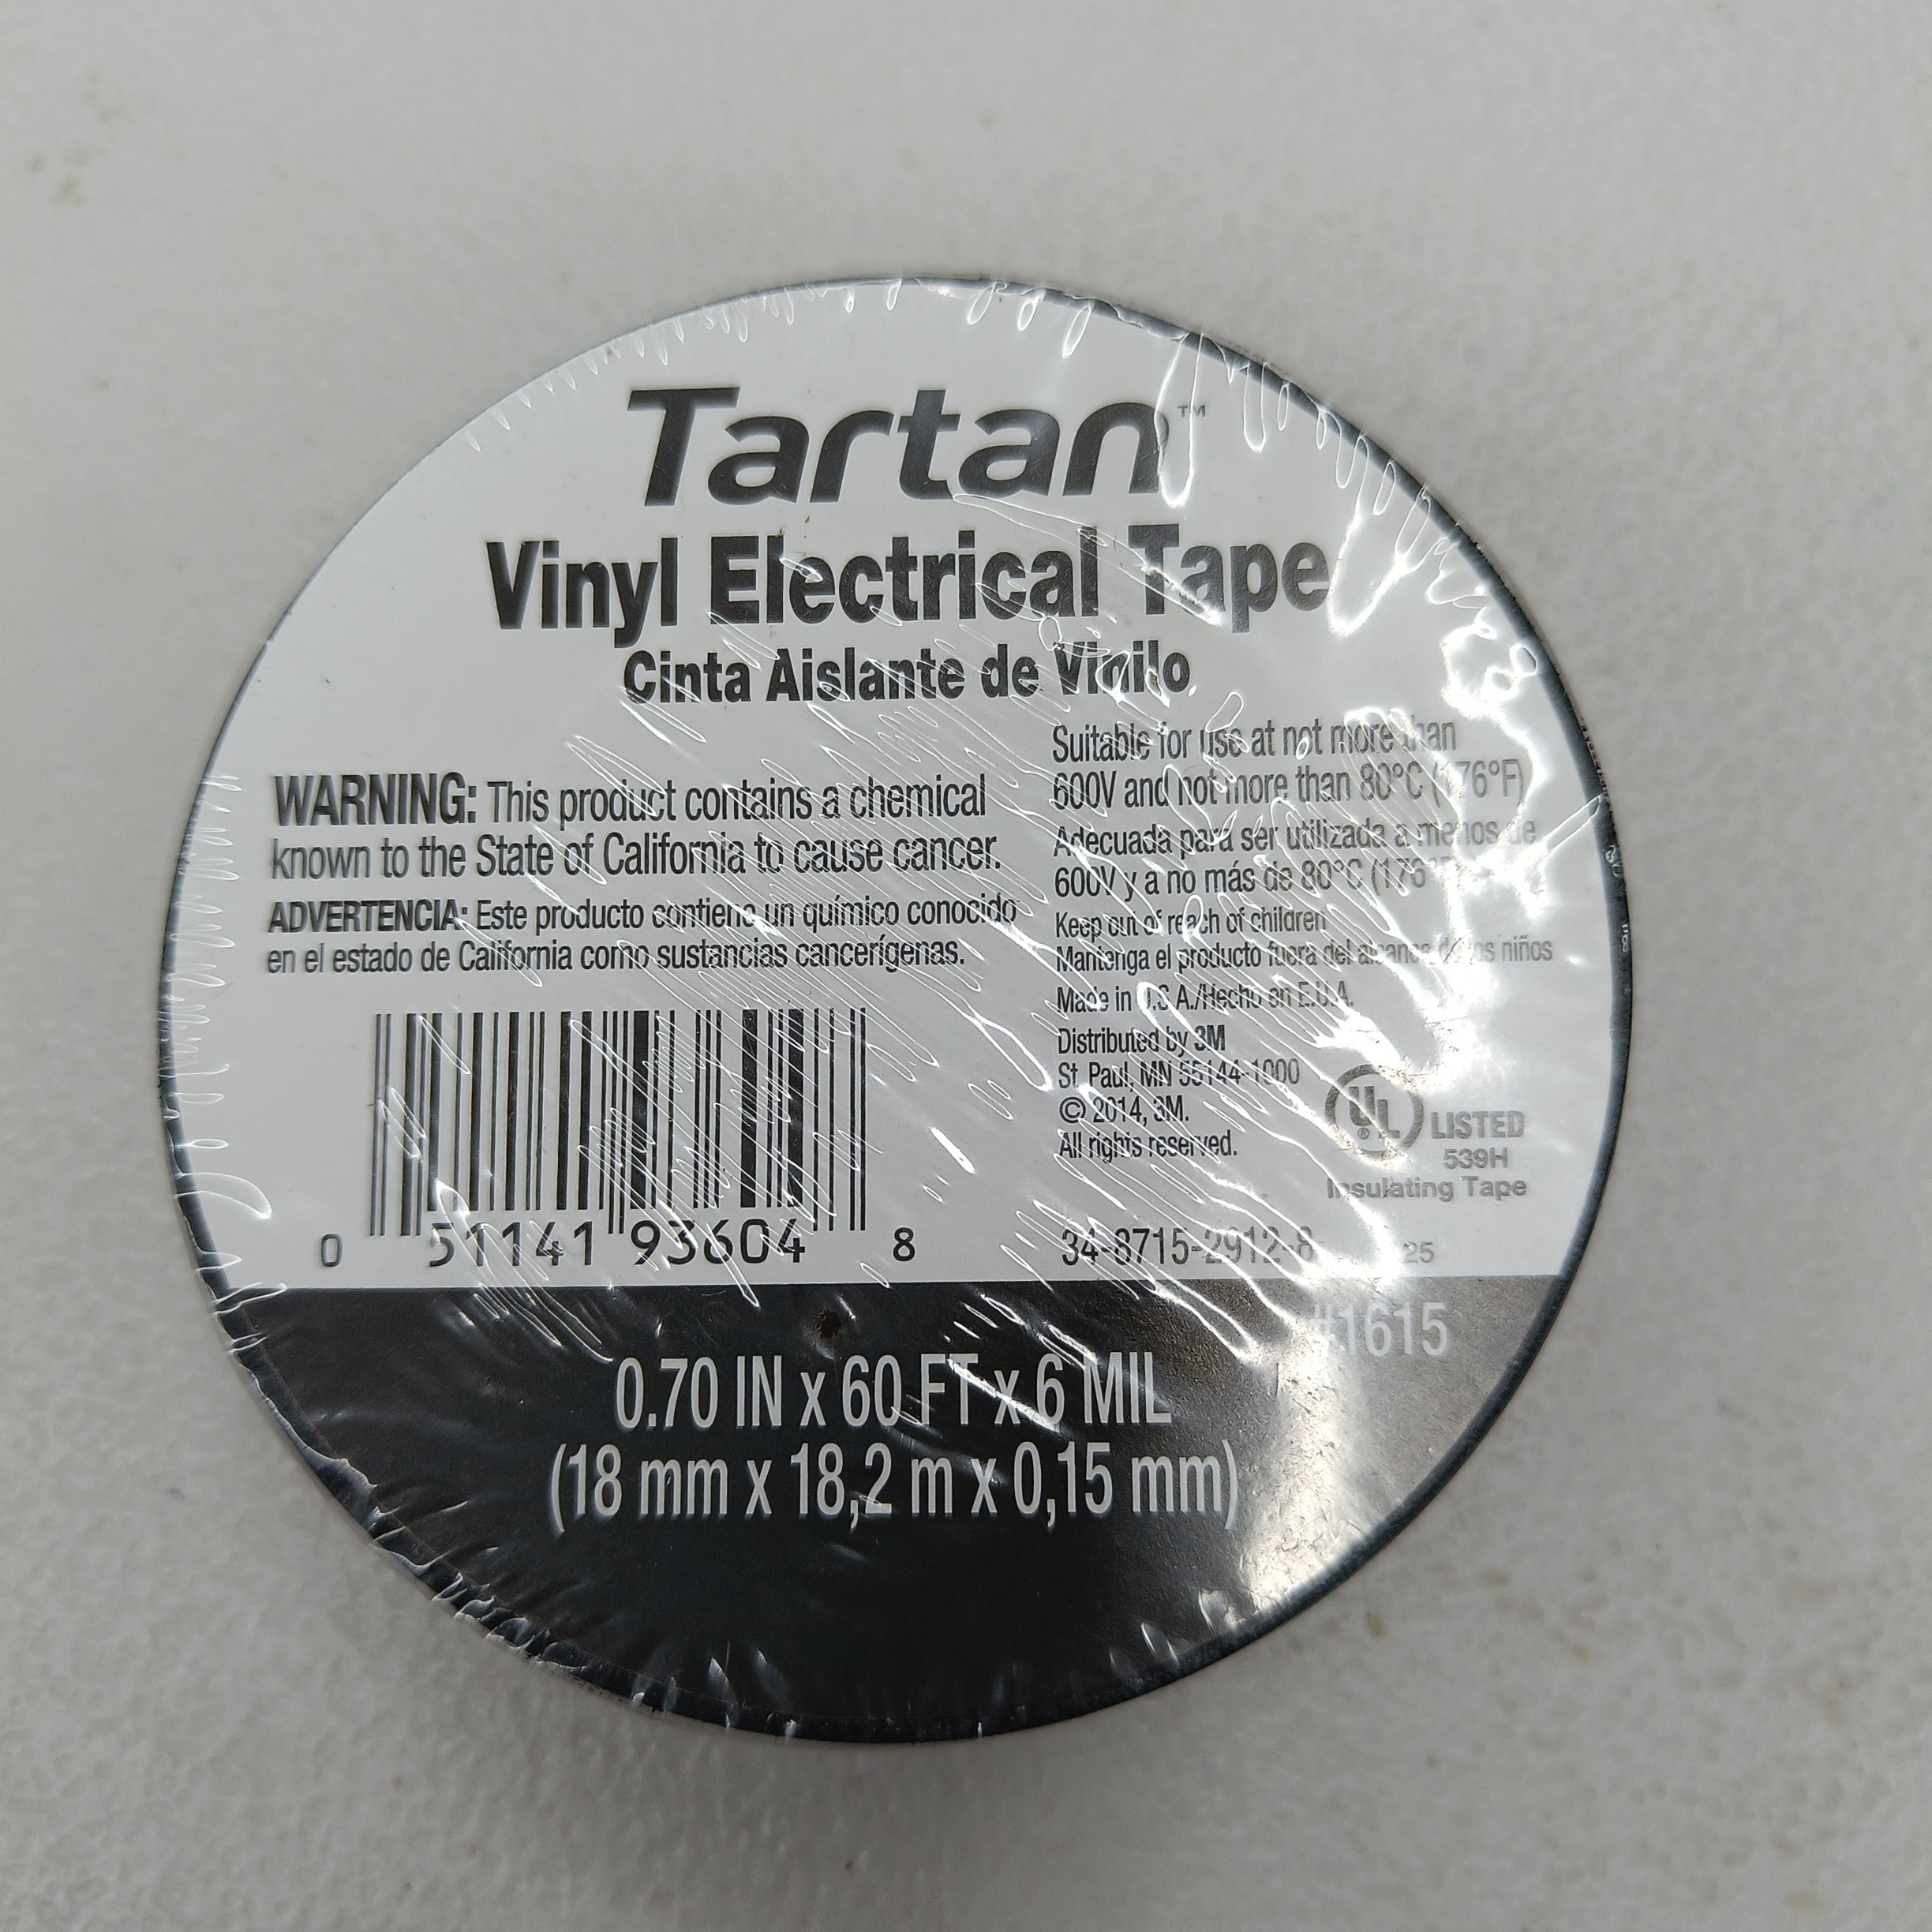 Tartan PVC Electrical Tape(used for bat grips)